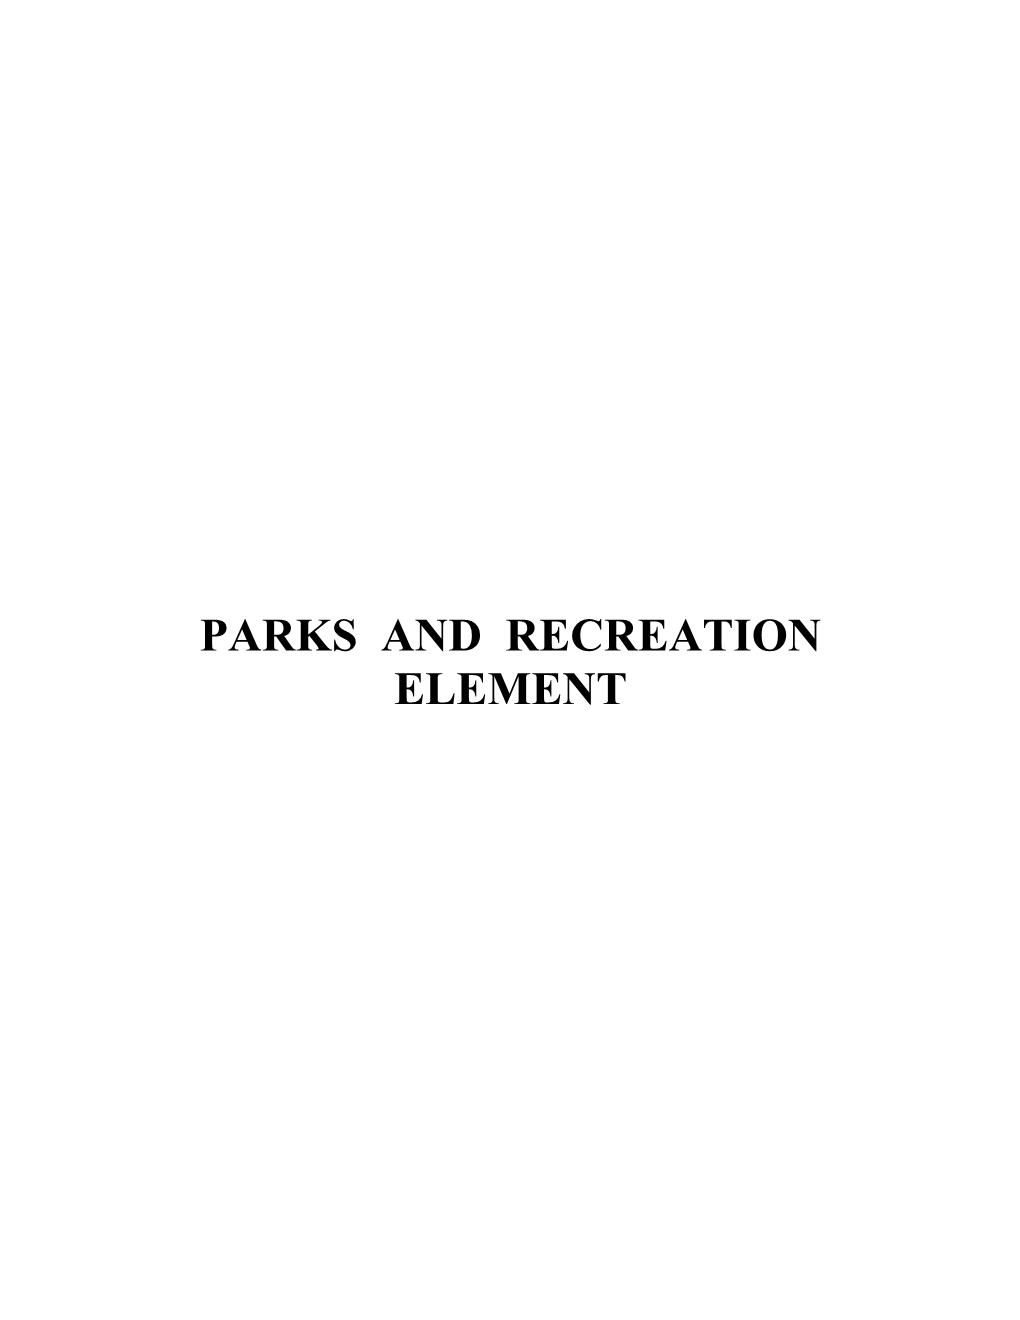 2007 Comprehensive Plan: Parks and Recreation Element